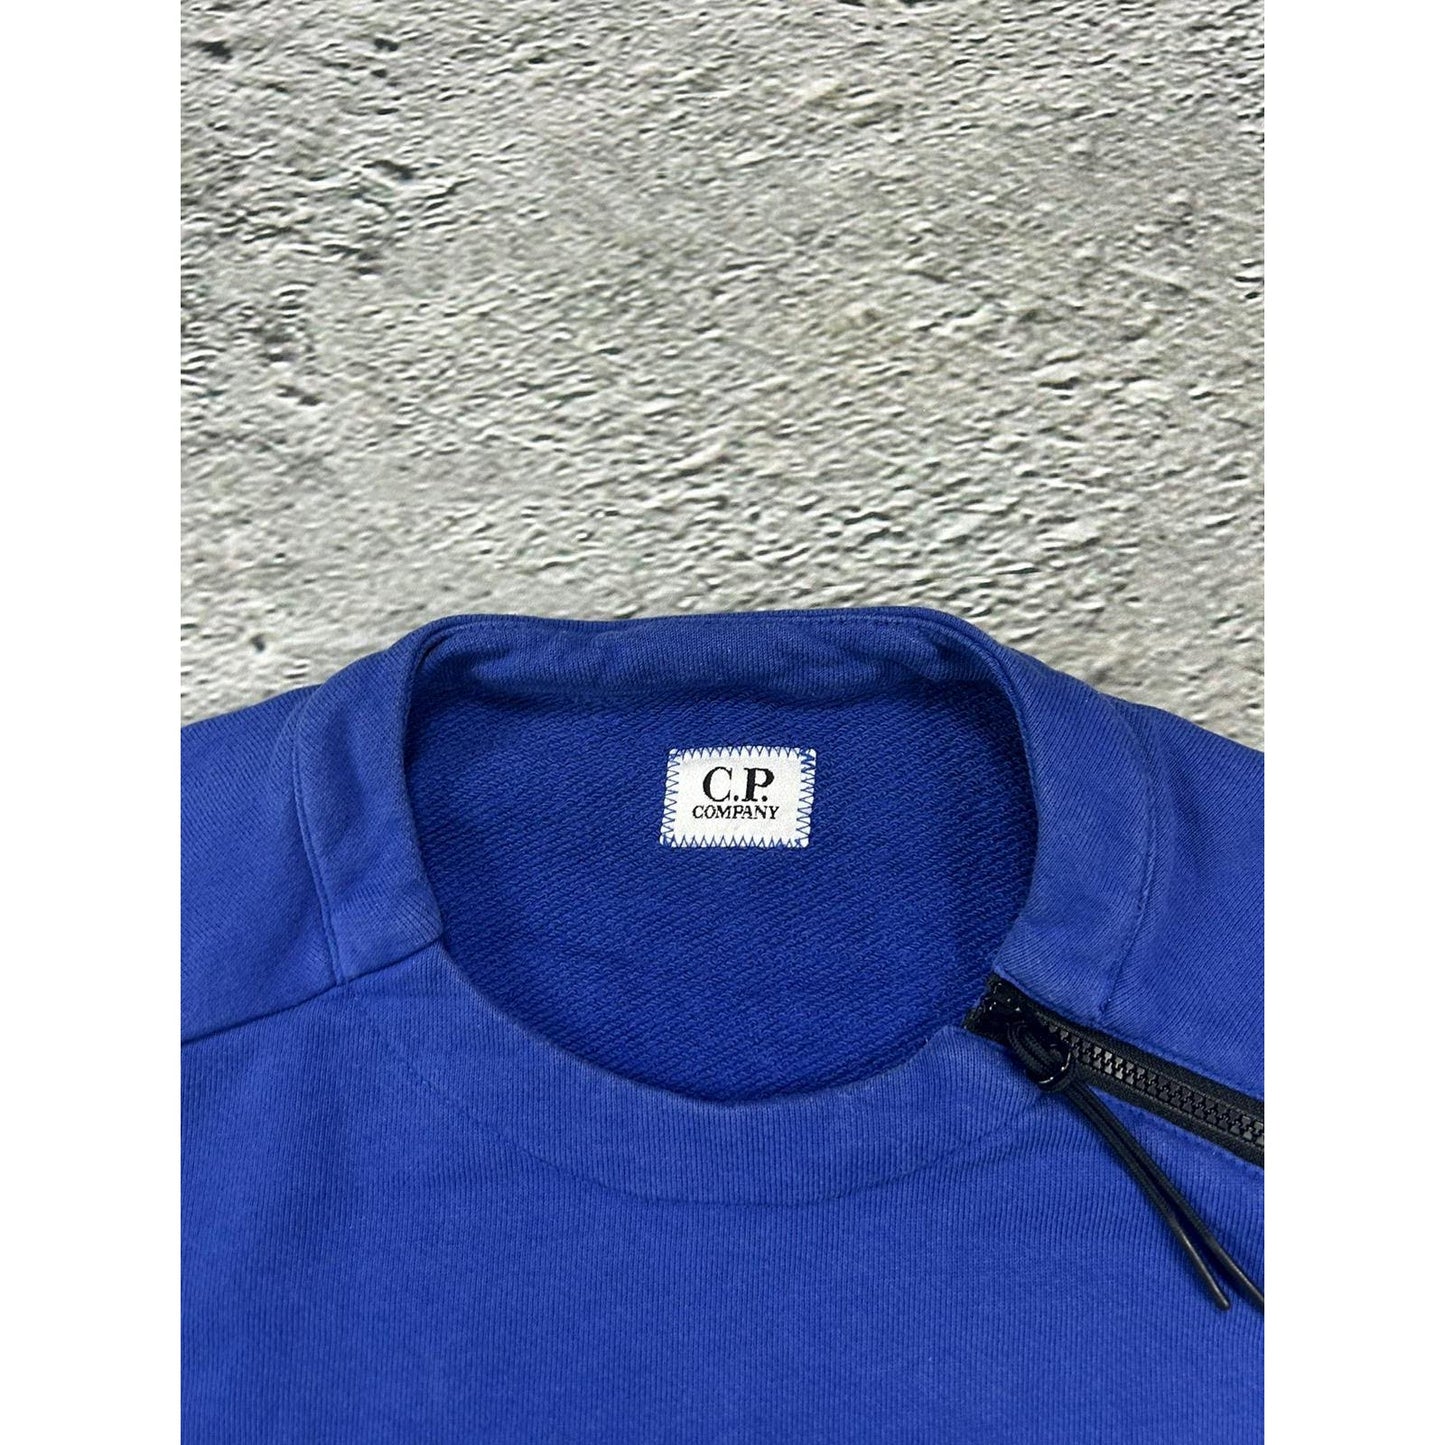 C.P. Company sweatshirt with lens blue asymmetrical zip